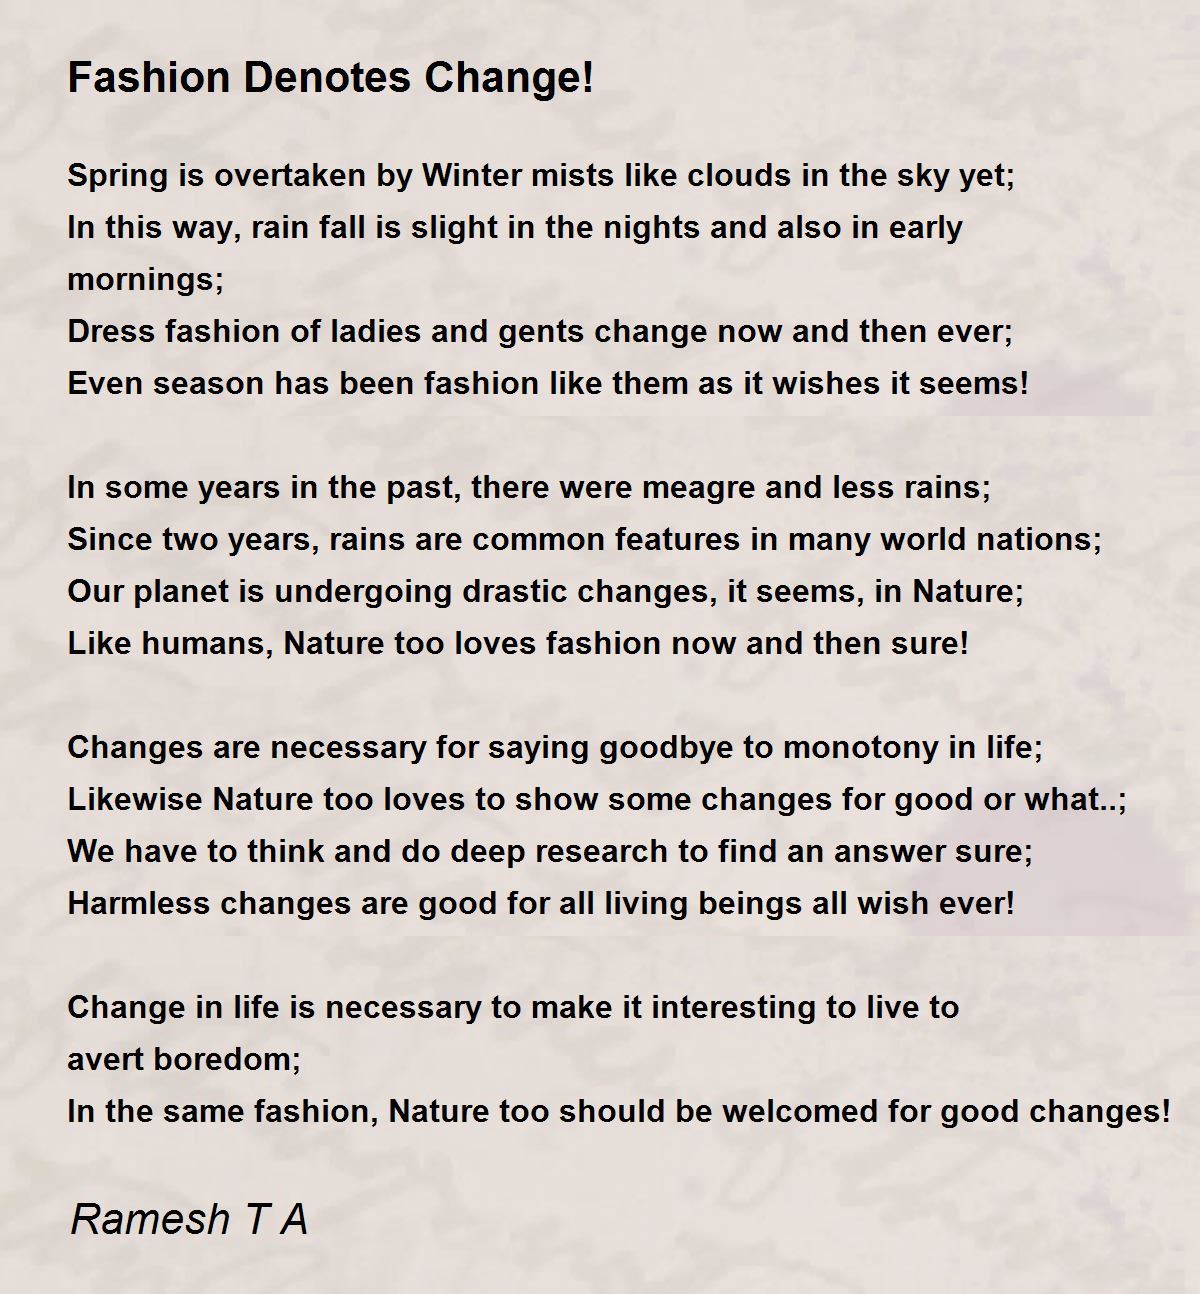 Fashion Denotes Change! - Fashion Denotes Change! Poem by Ramesh T A